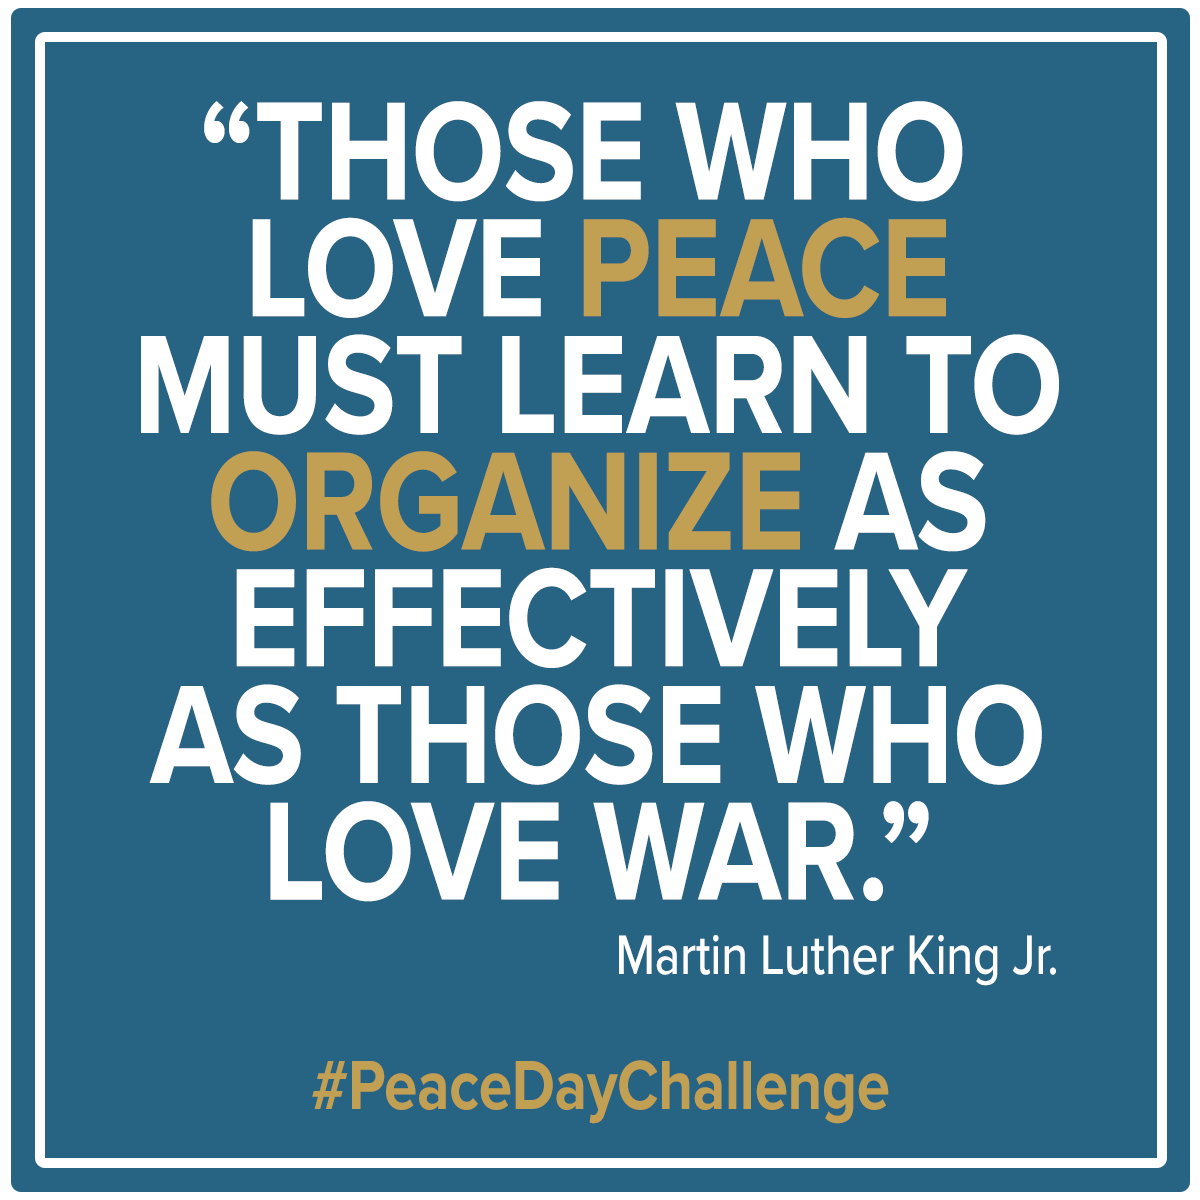 positive peace definition